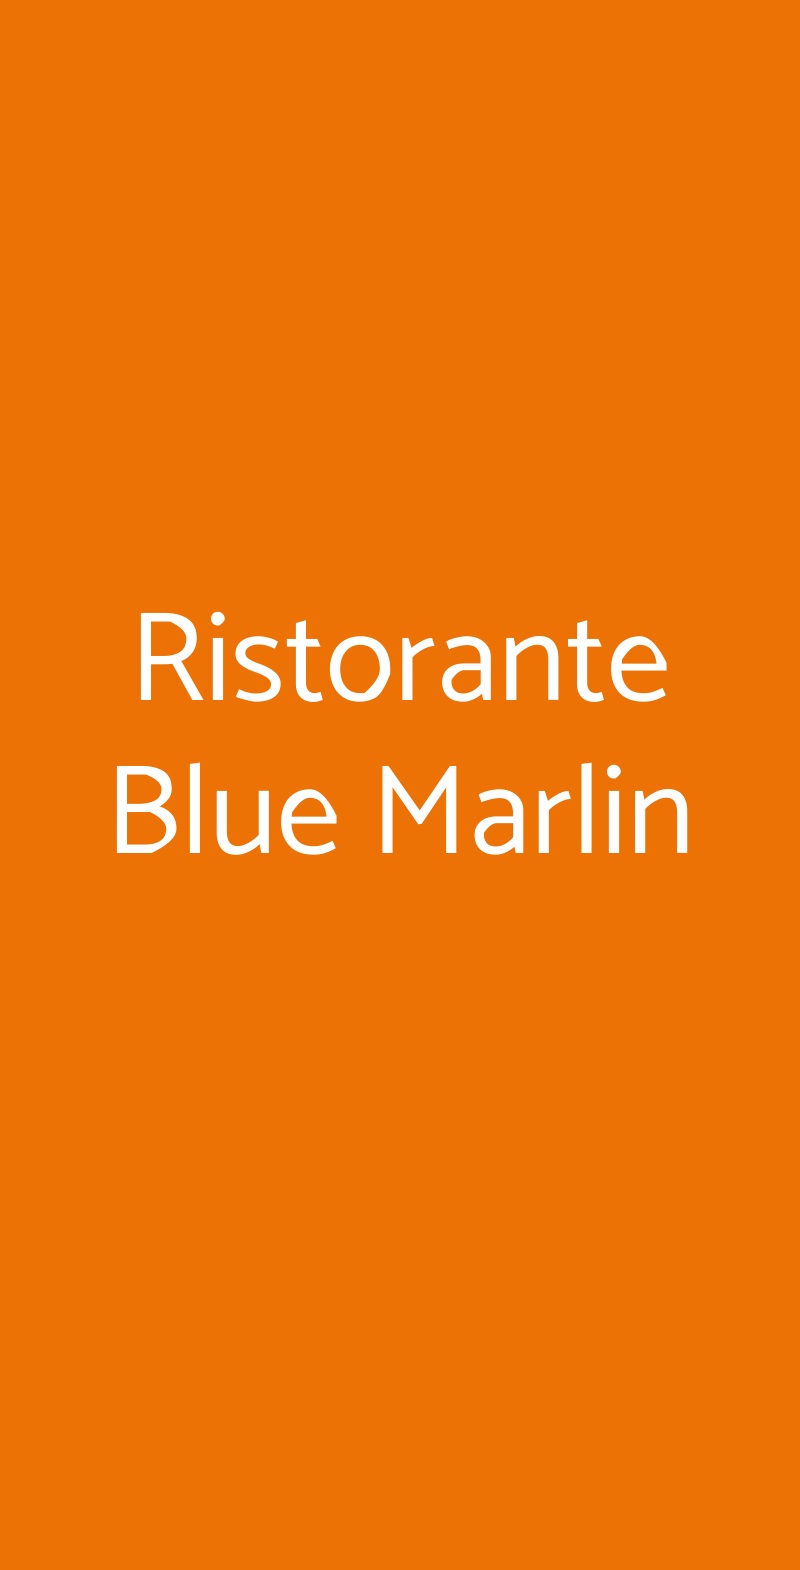 Ristorante Blue Marlin San Vincenzo menù 1 pagina